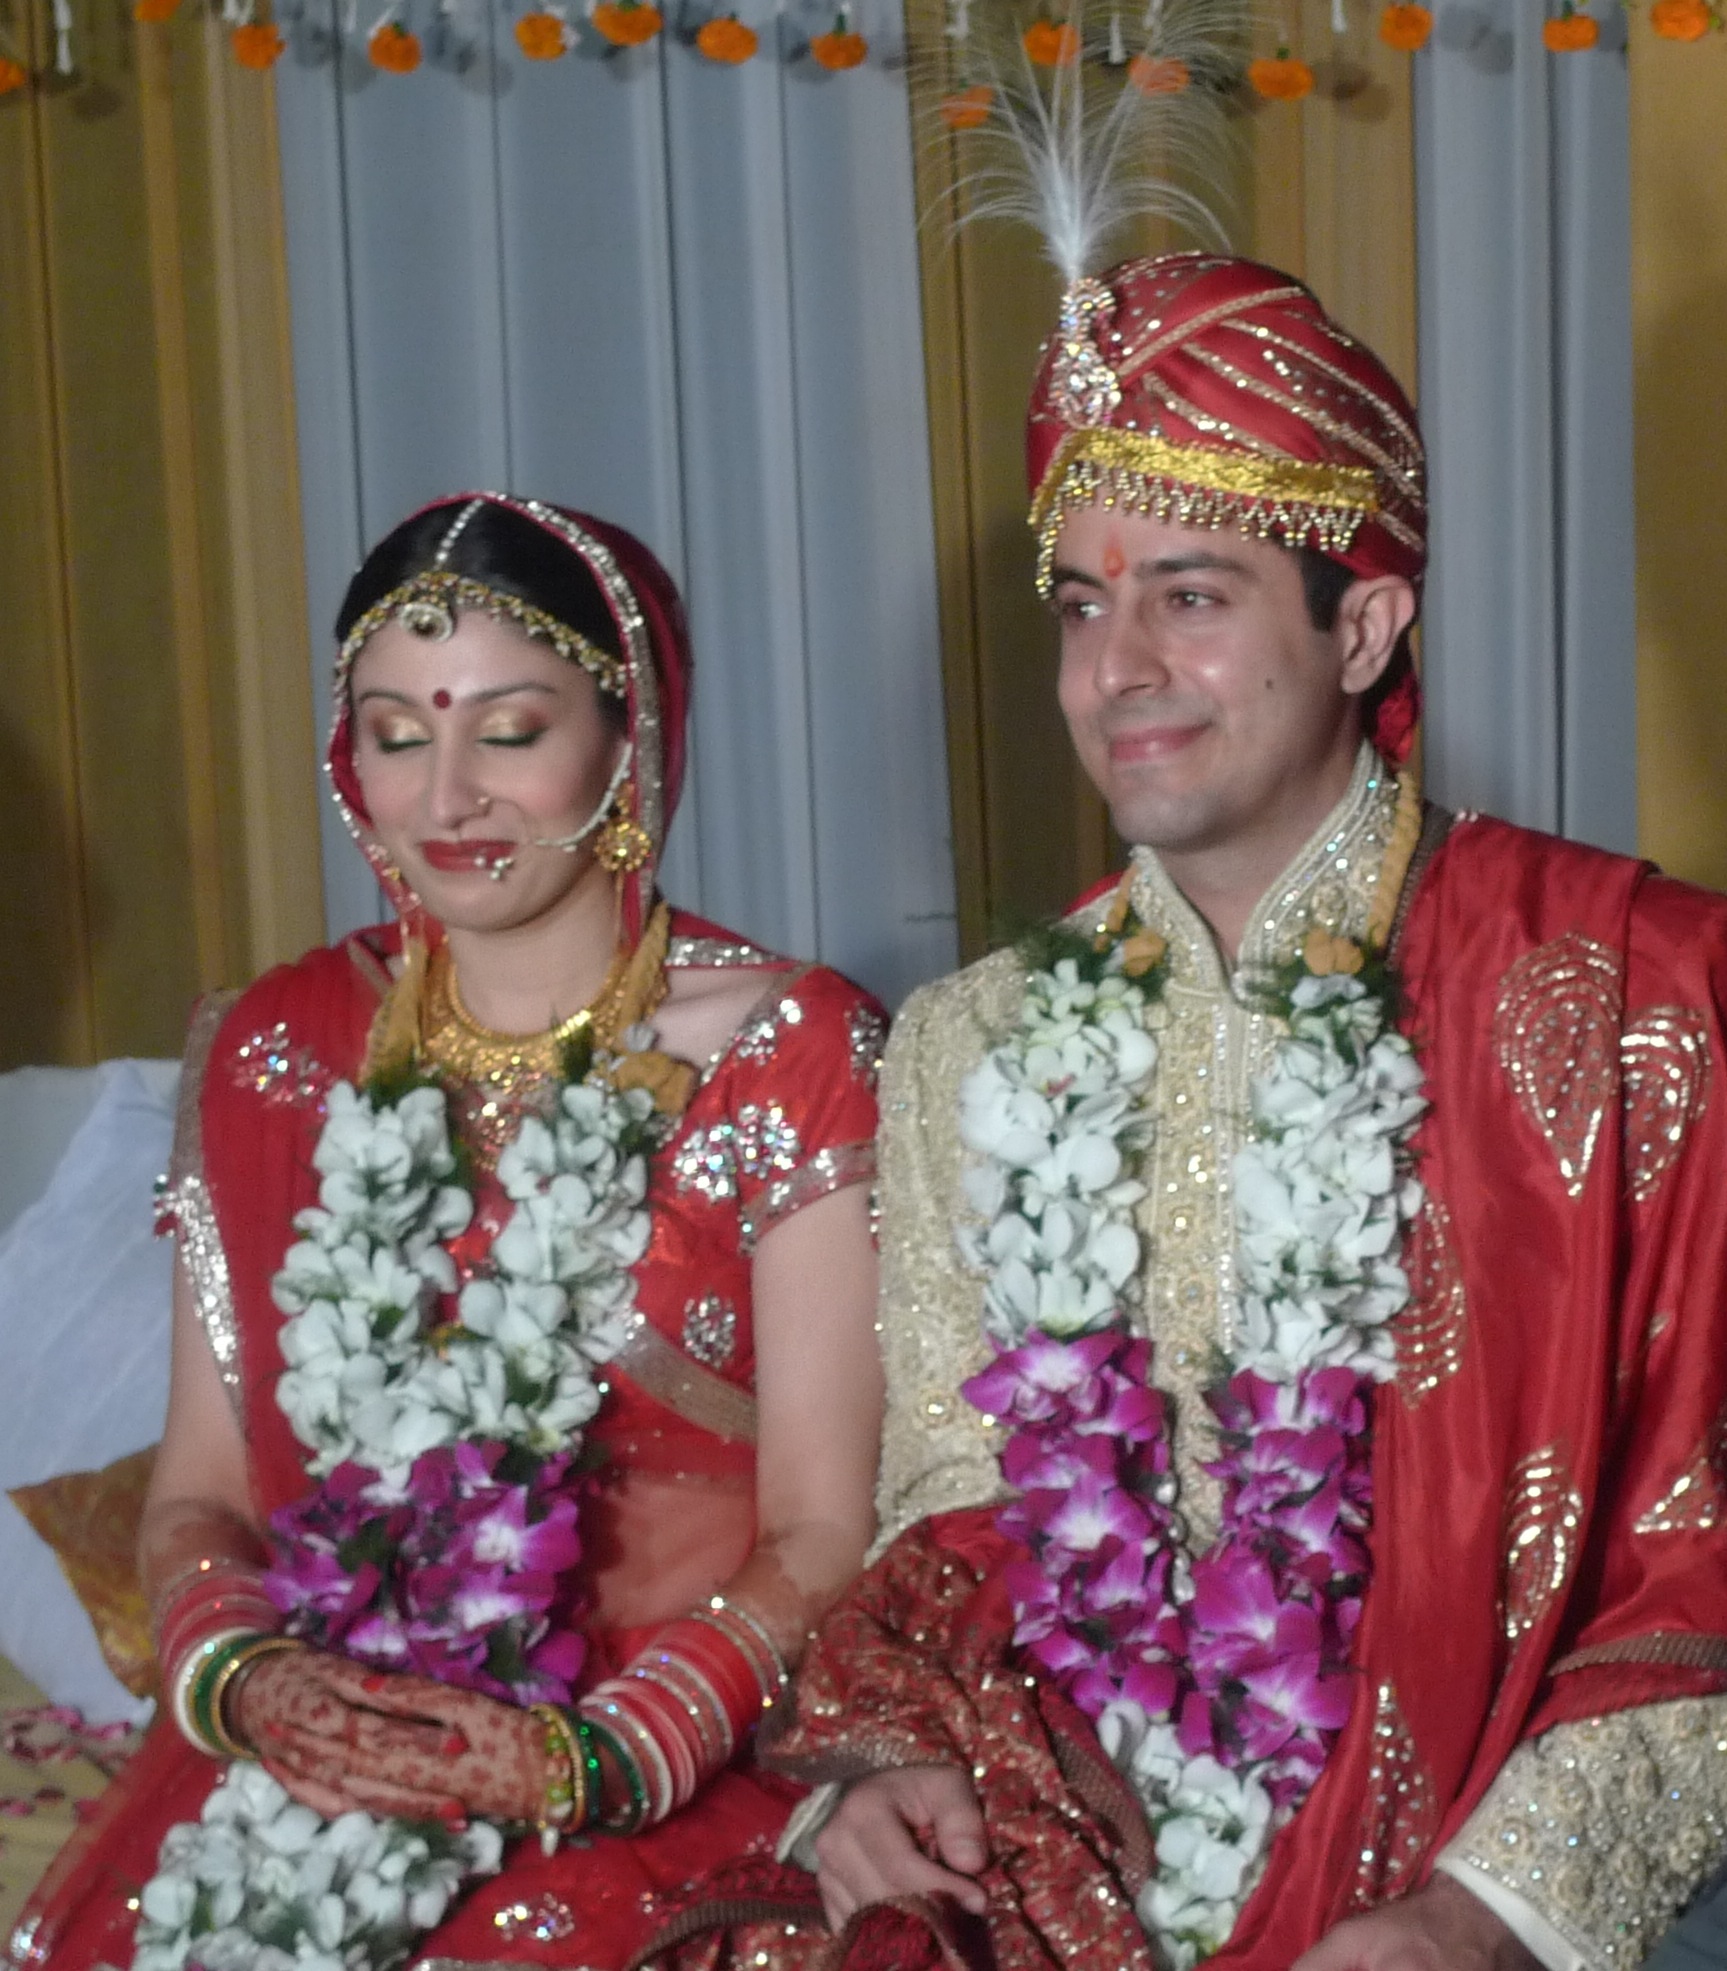 http://upload.wikimedia.org/wikipedia/commons/8/8d/Hindu_wedding_couple.jpg